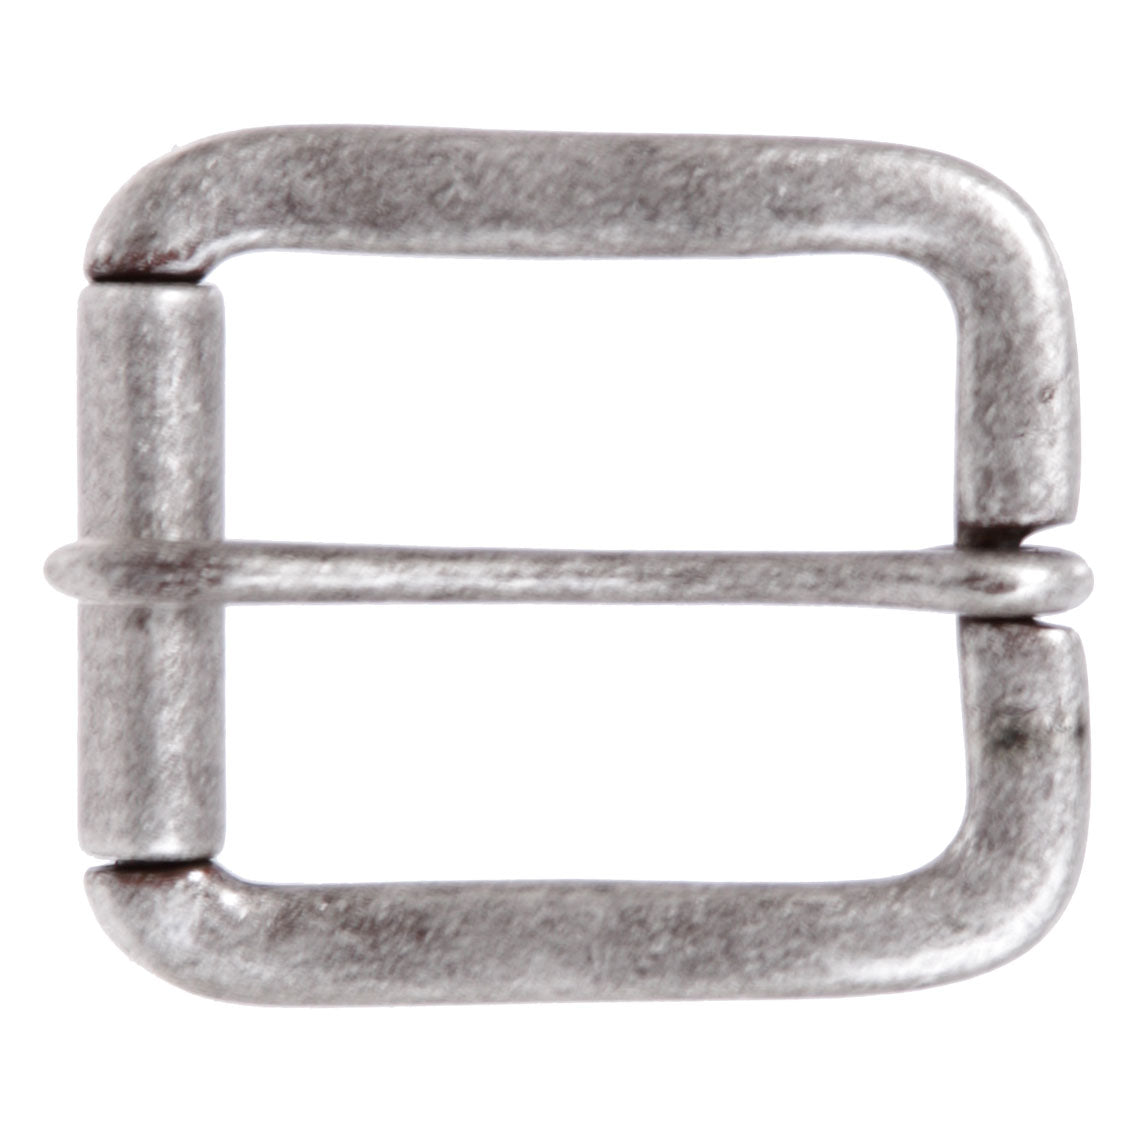 Rectangular Single Prong Replacement Belt Buckle 1-1/2" (38mm) wide